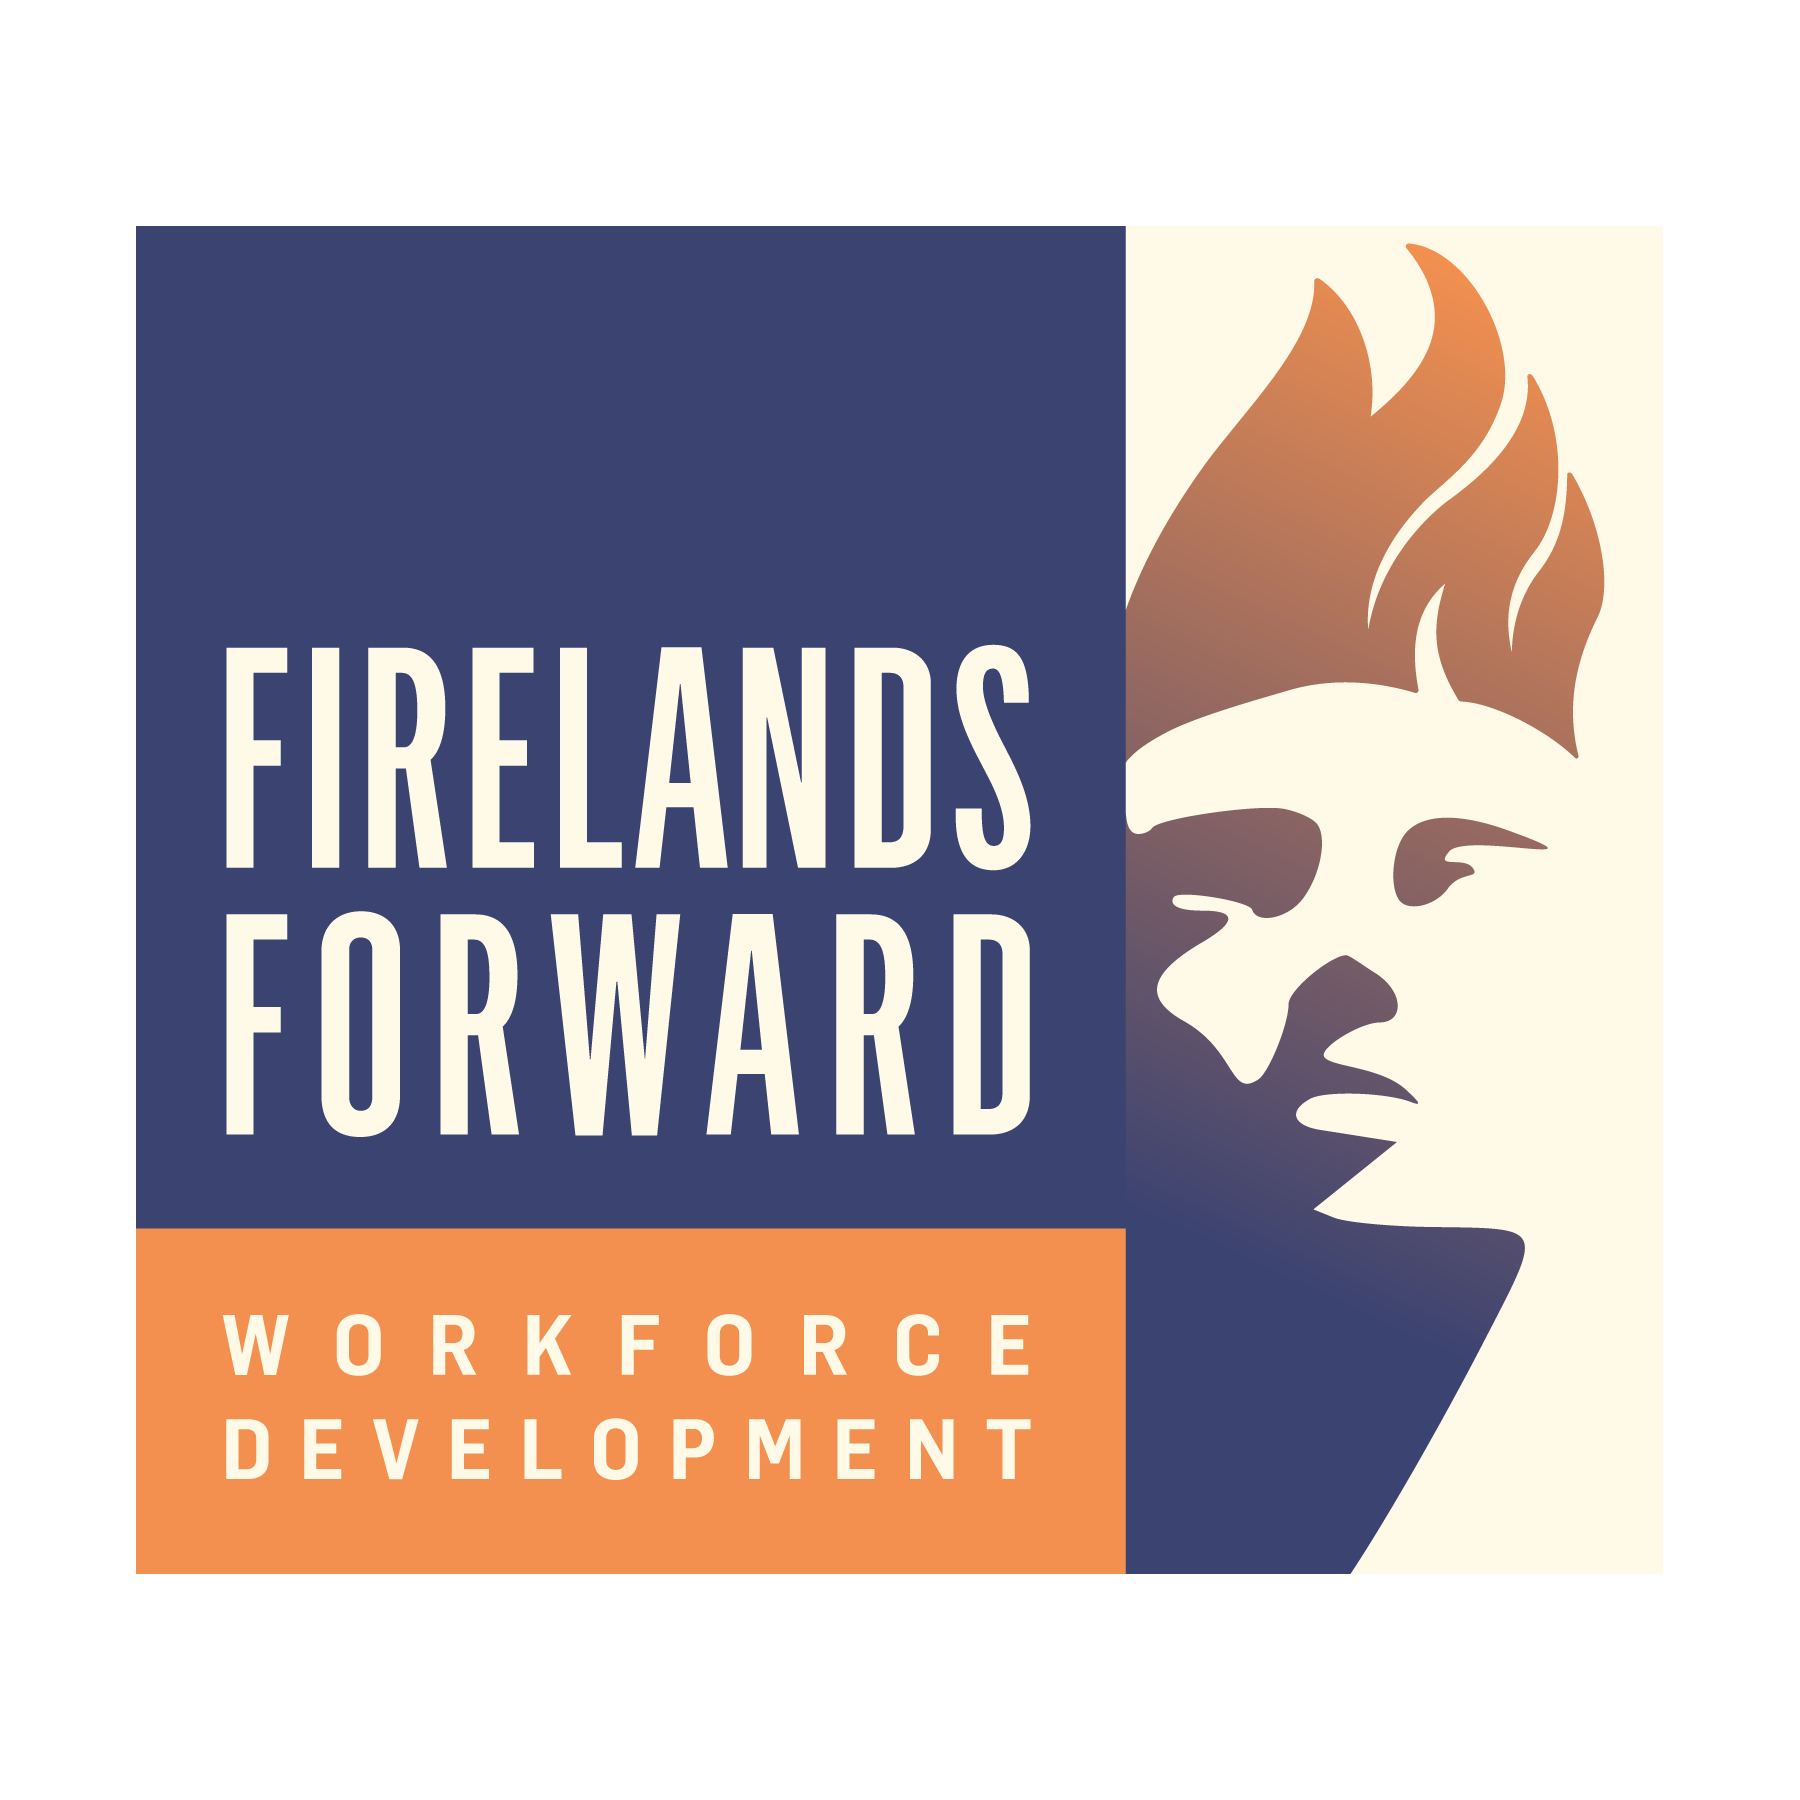 Firelands Forward